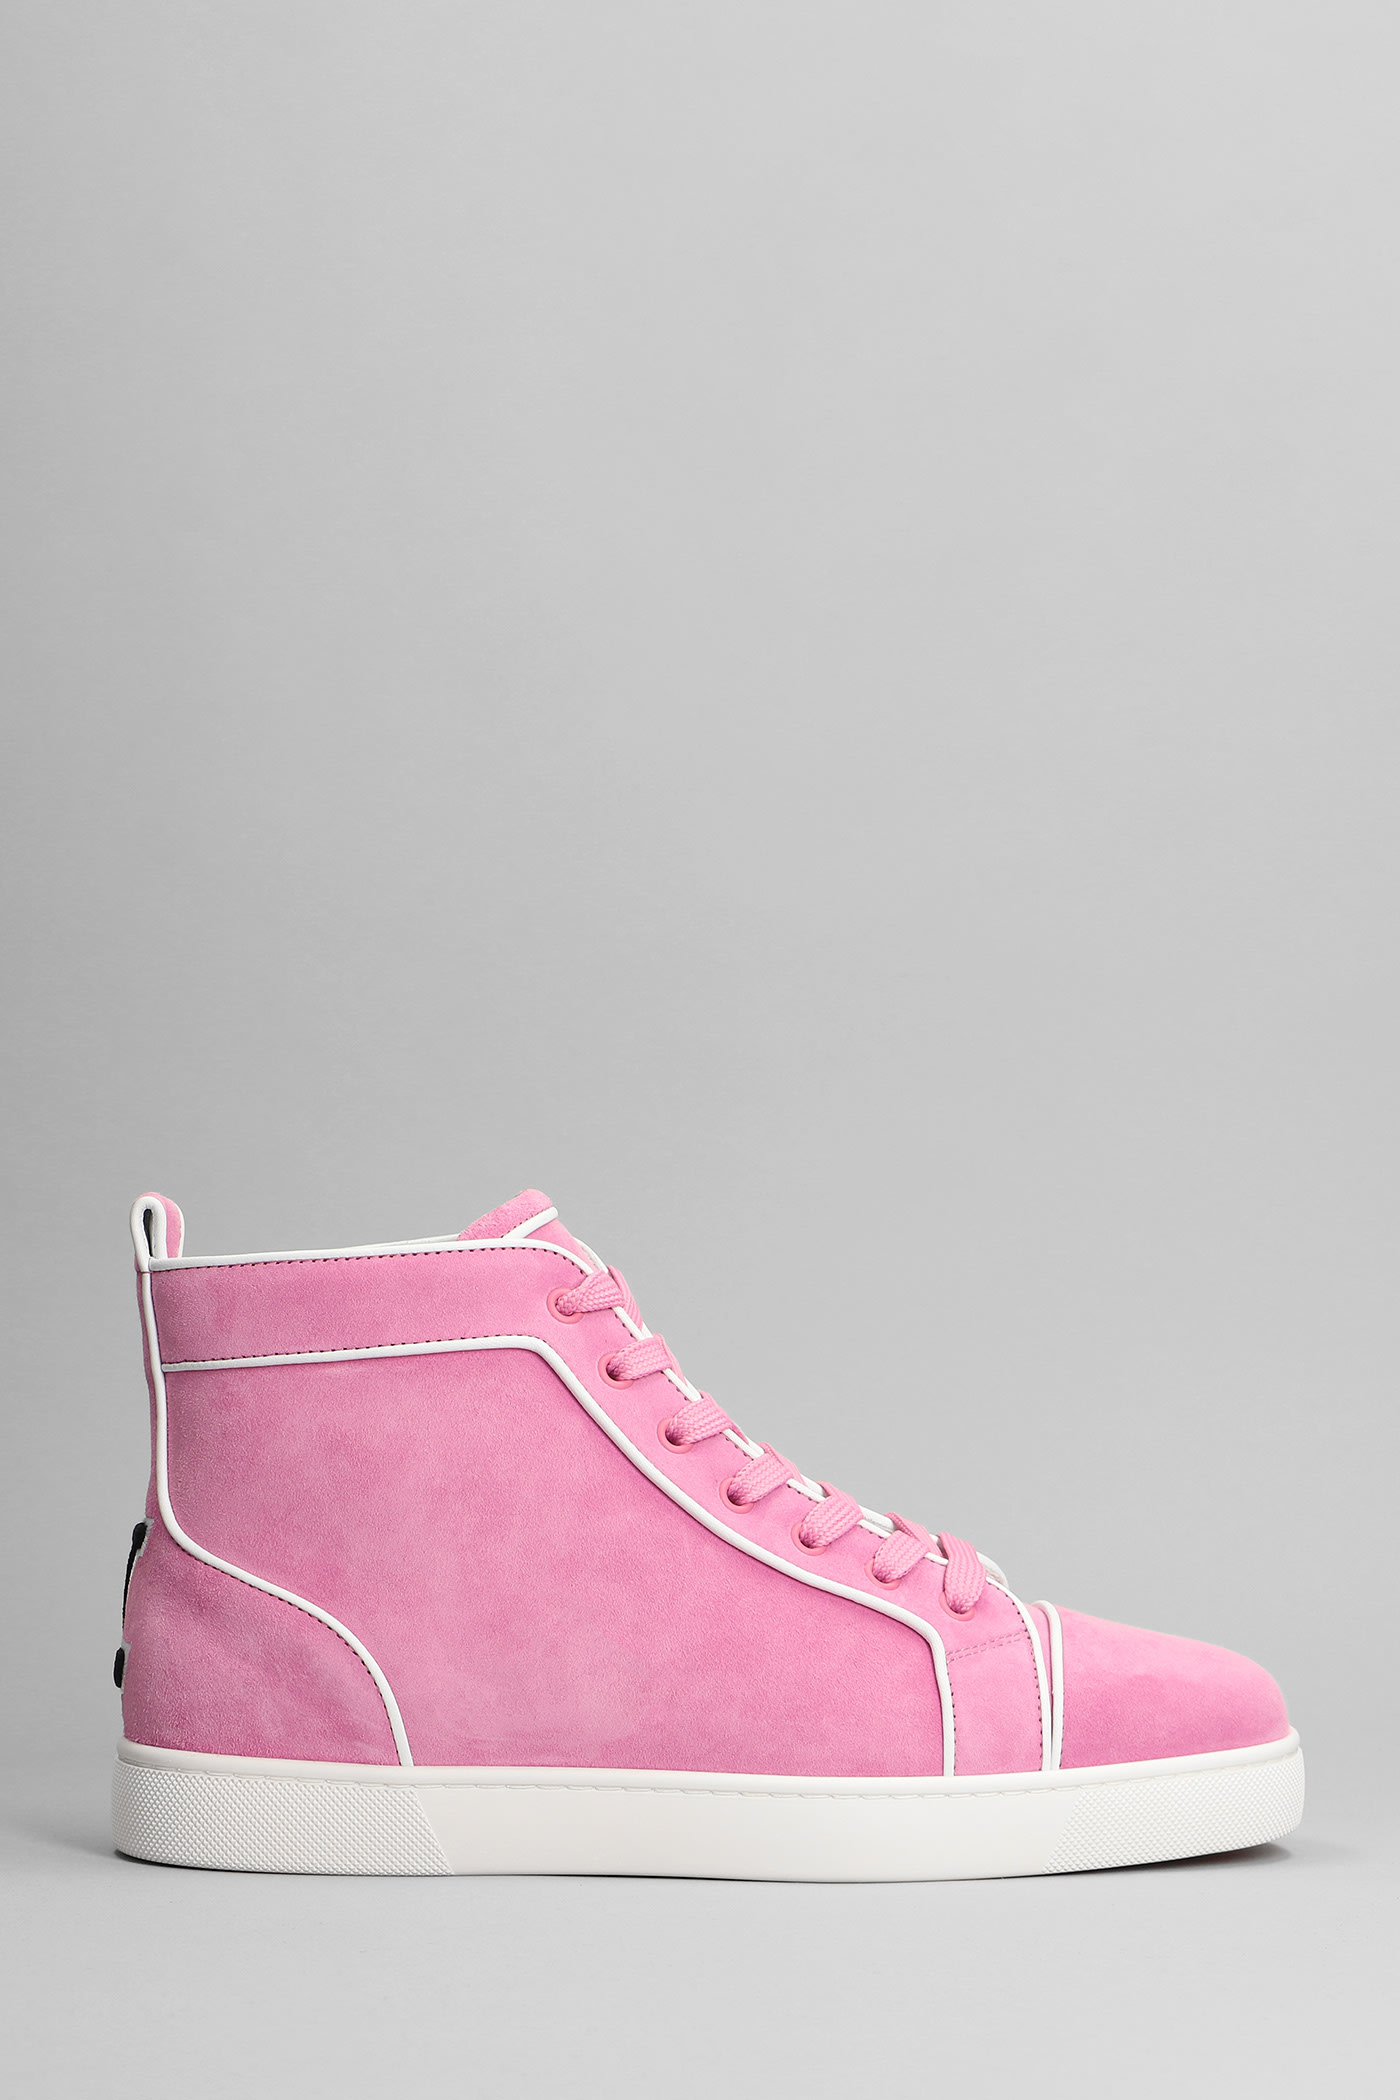 Christian Louboutin Varsilouis Flat Sneakers In Rose-pink Suede